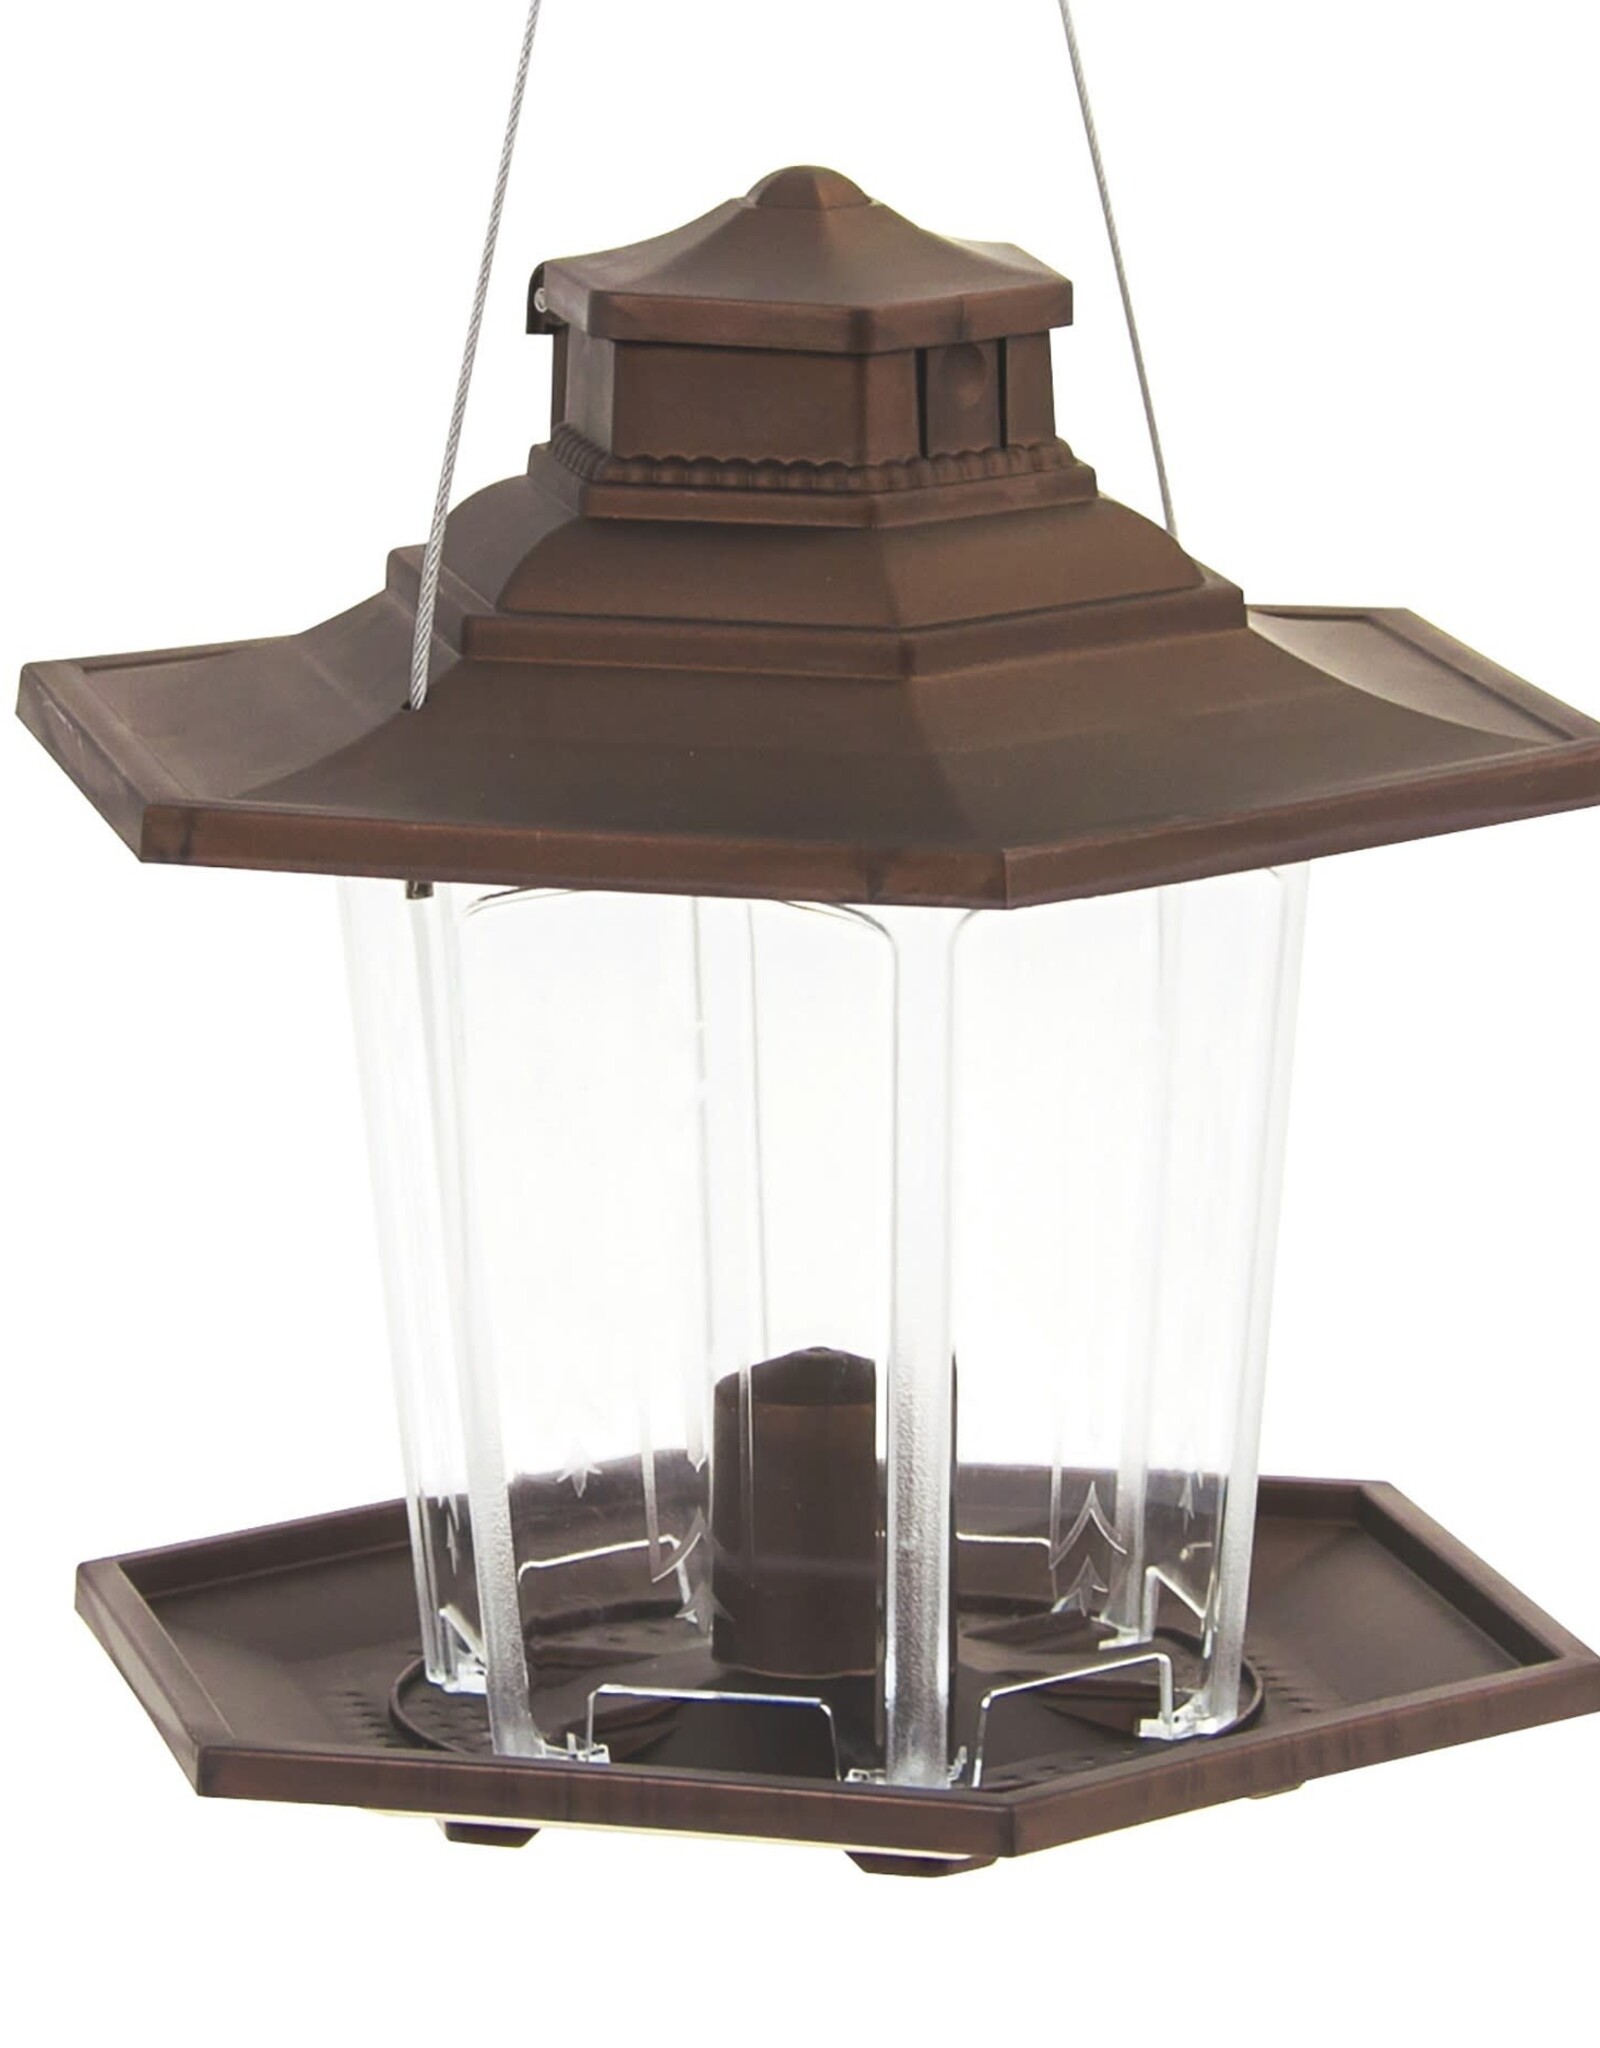 Classic Brands™ Small Lantern Plastic Hopper Feeder  - 2.6lb Capacity